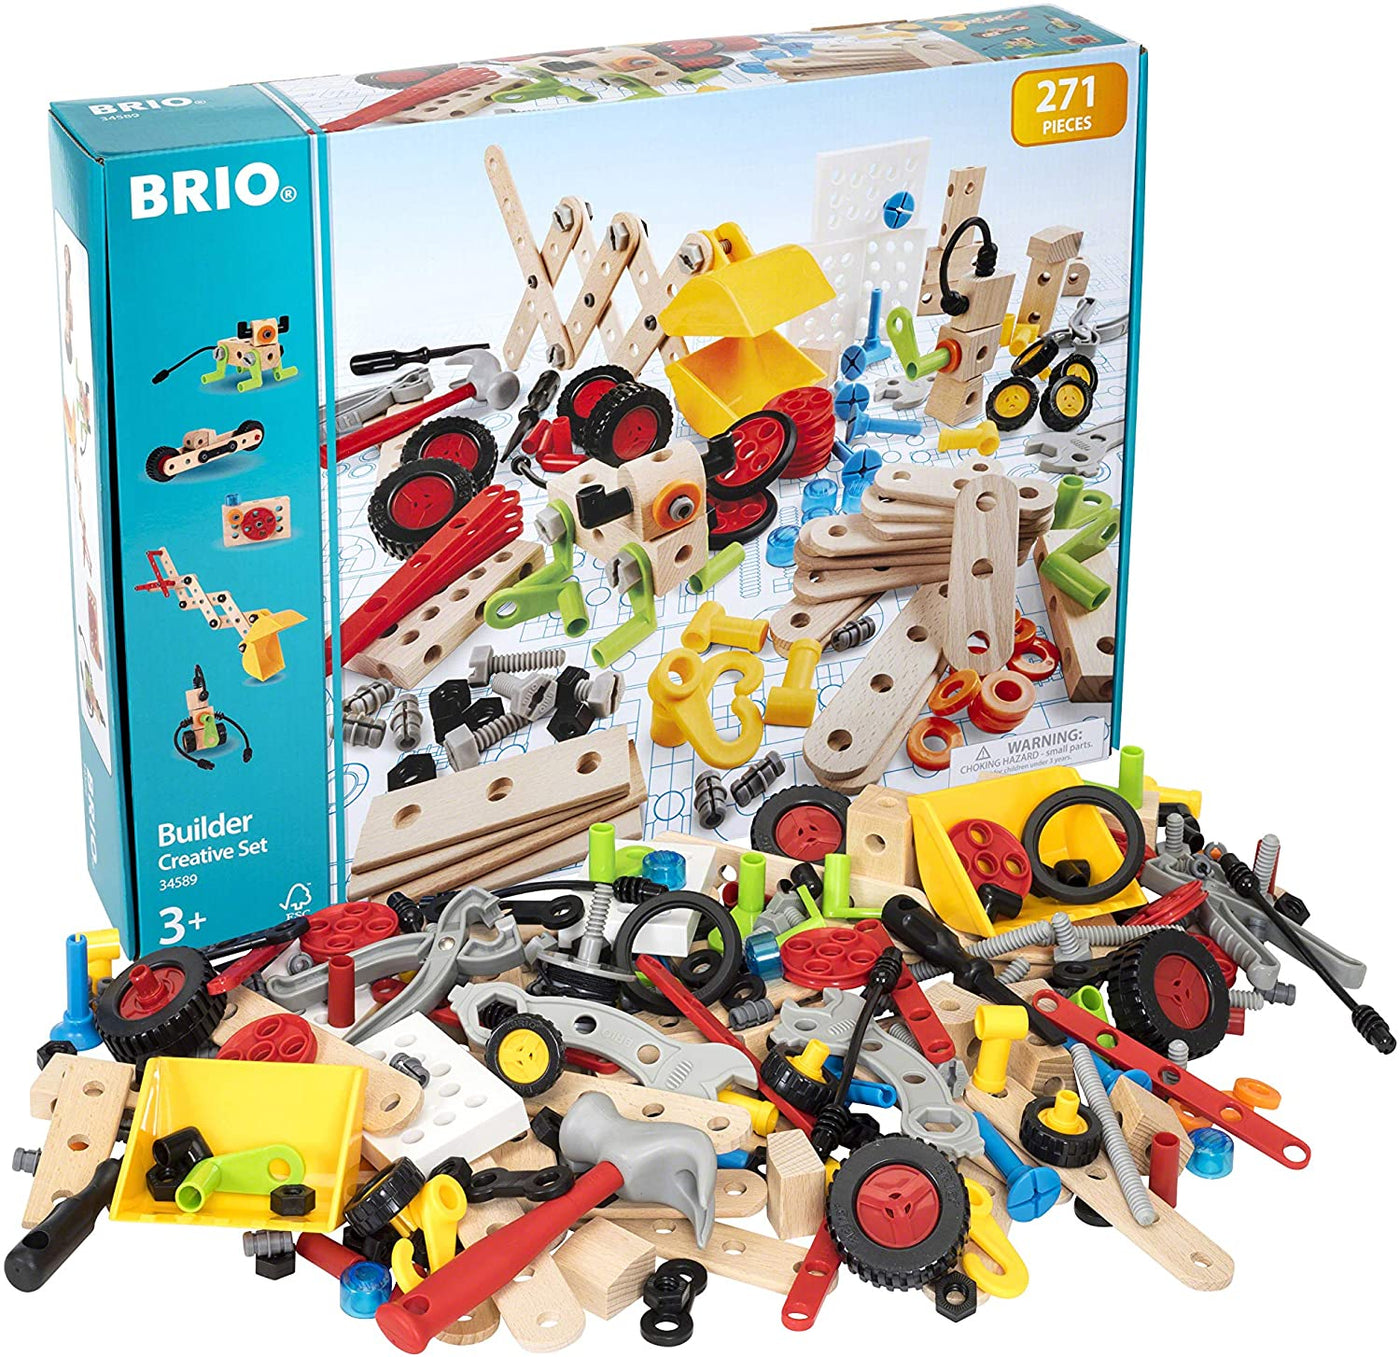 >BRIO 34589 Builder Creative Set 271 Piece Construction Set STEM Toy 3+